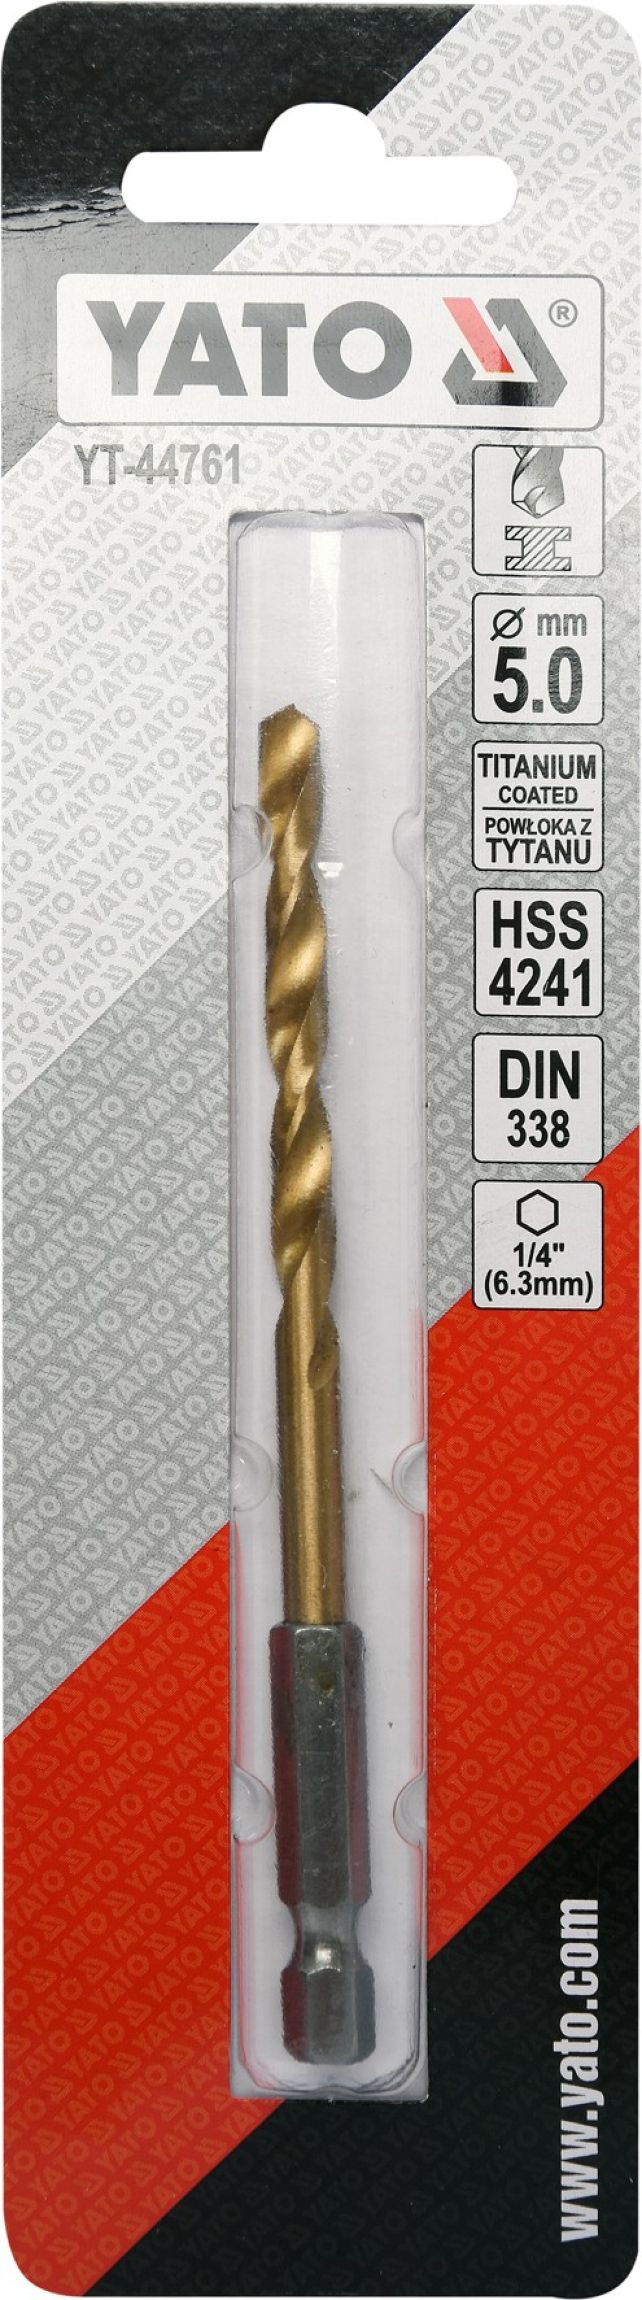 Vrtk do kovu HSS-titan 10,0mm se estihranou stopkou 1/4" Yato YT-44772